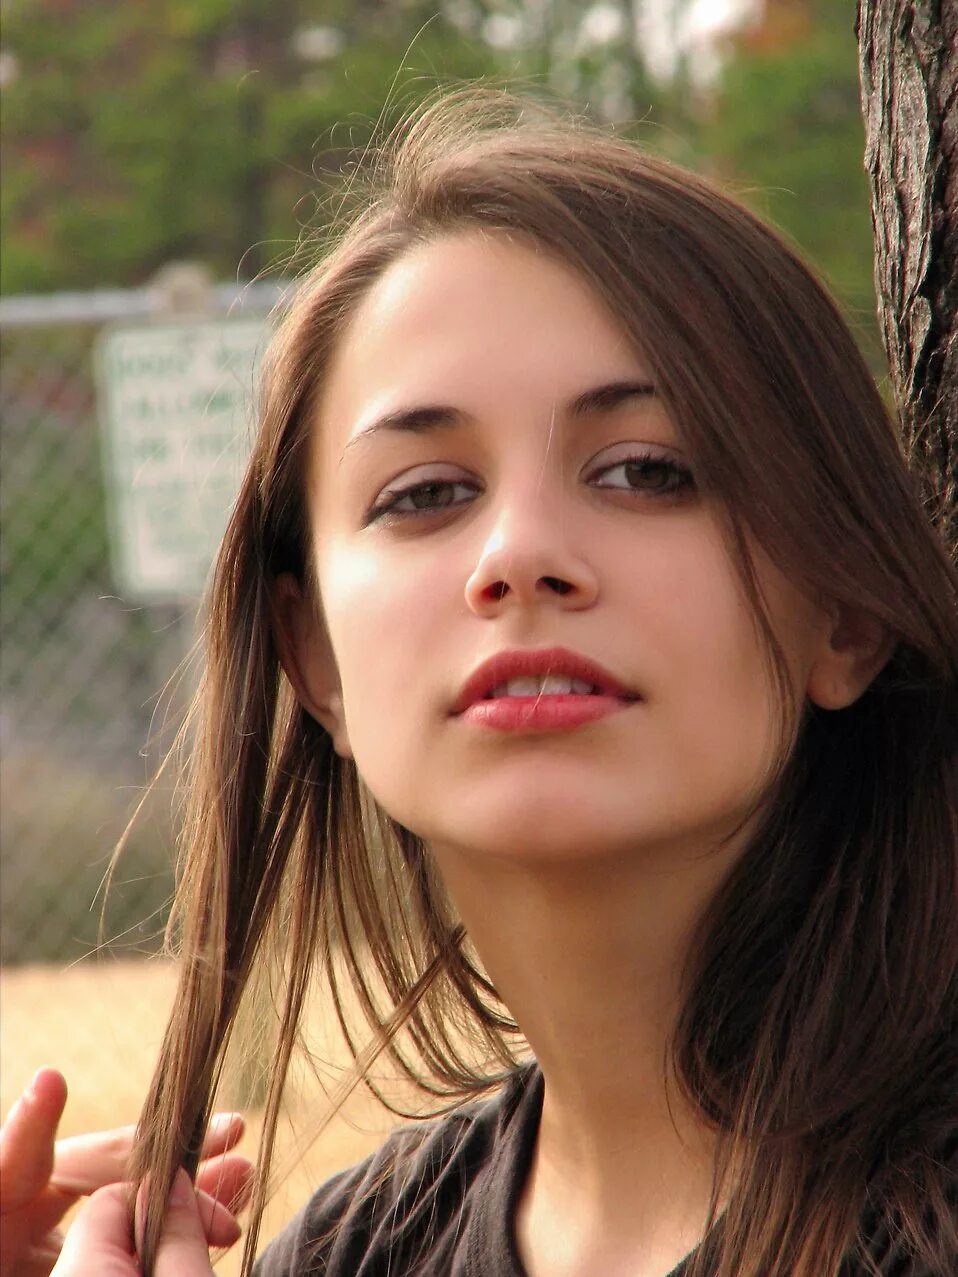 Teen picture forum. Portrait of pretty teenage girl. Victoria Medlin.